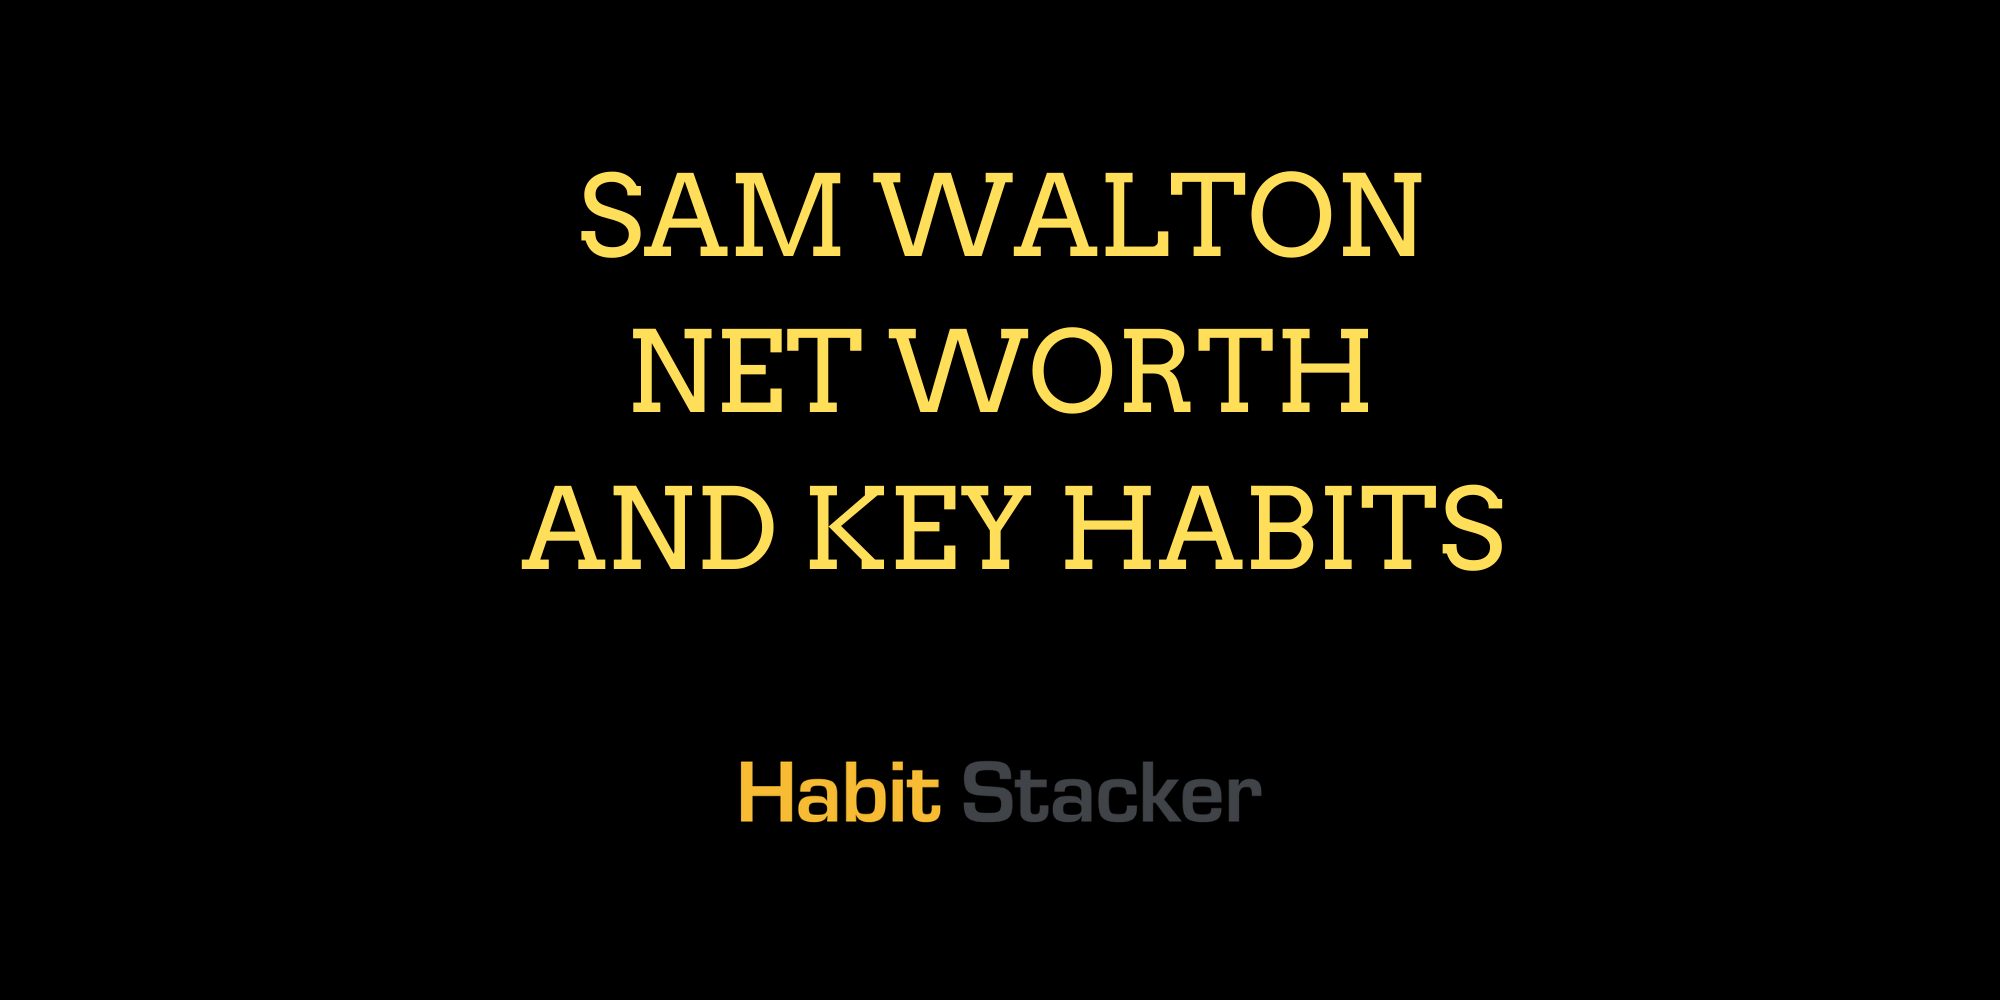 Sam Walton Net Worth and Key Habits